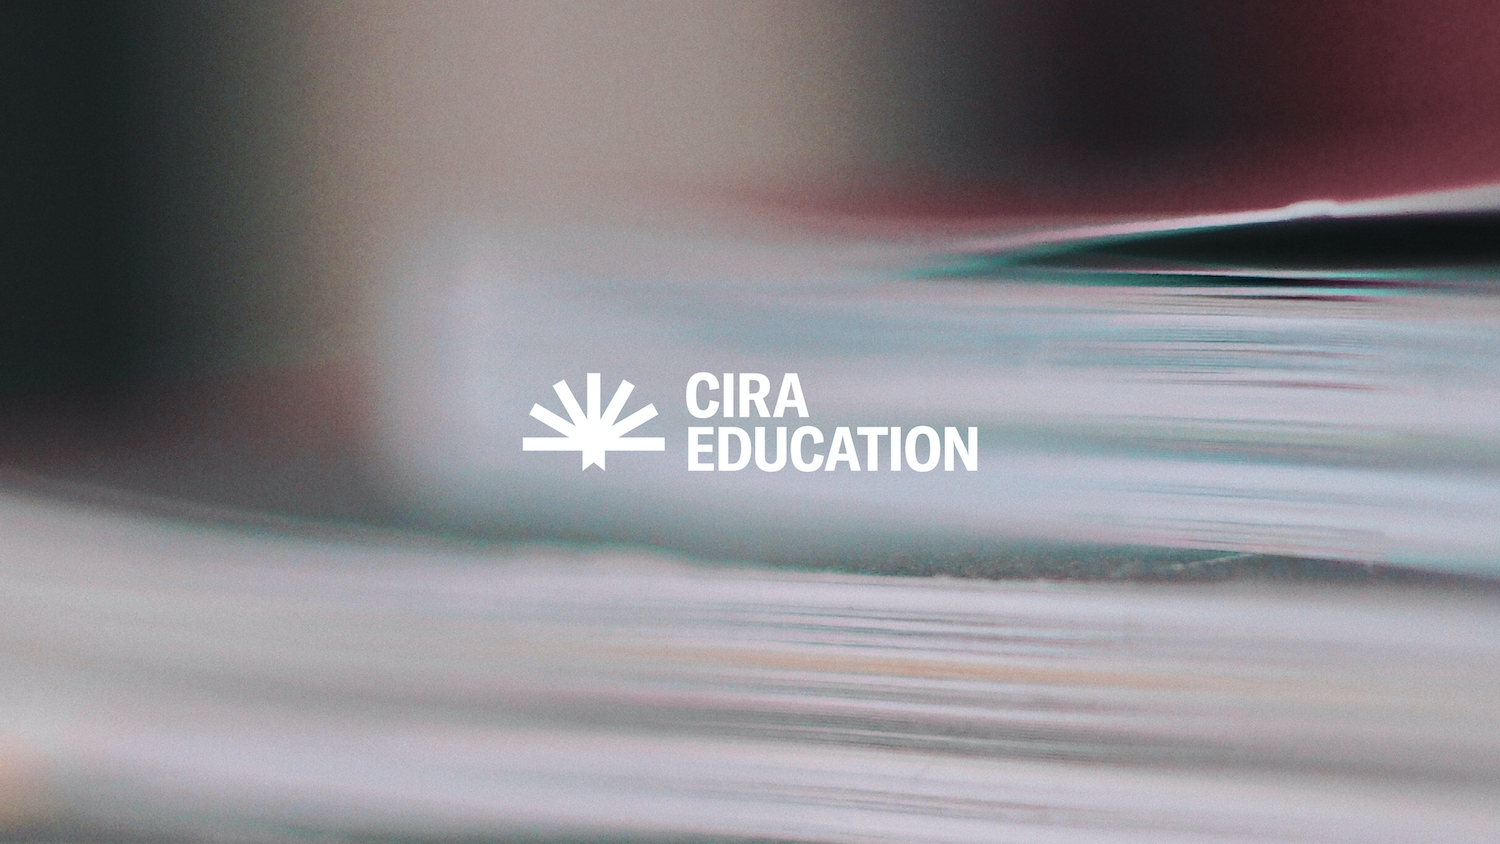 CIRA Education Brand Identity